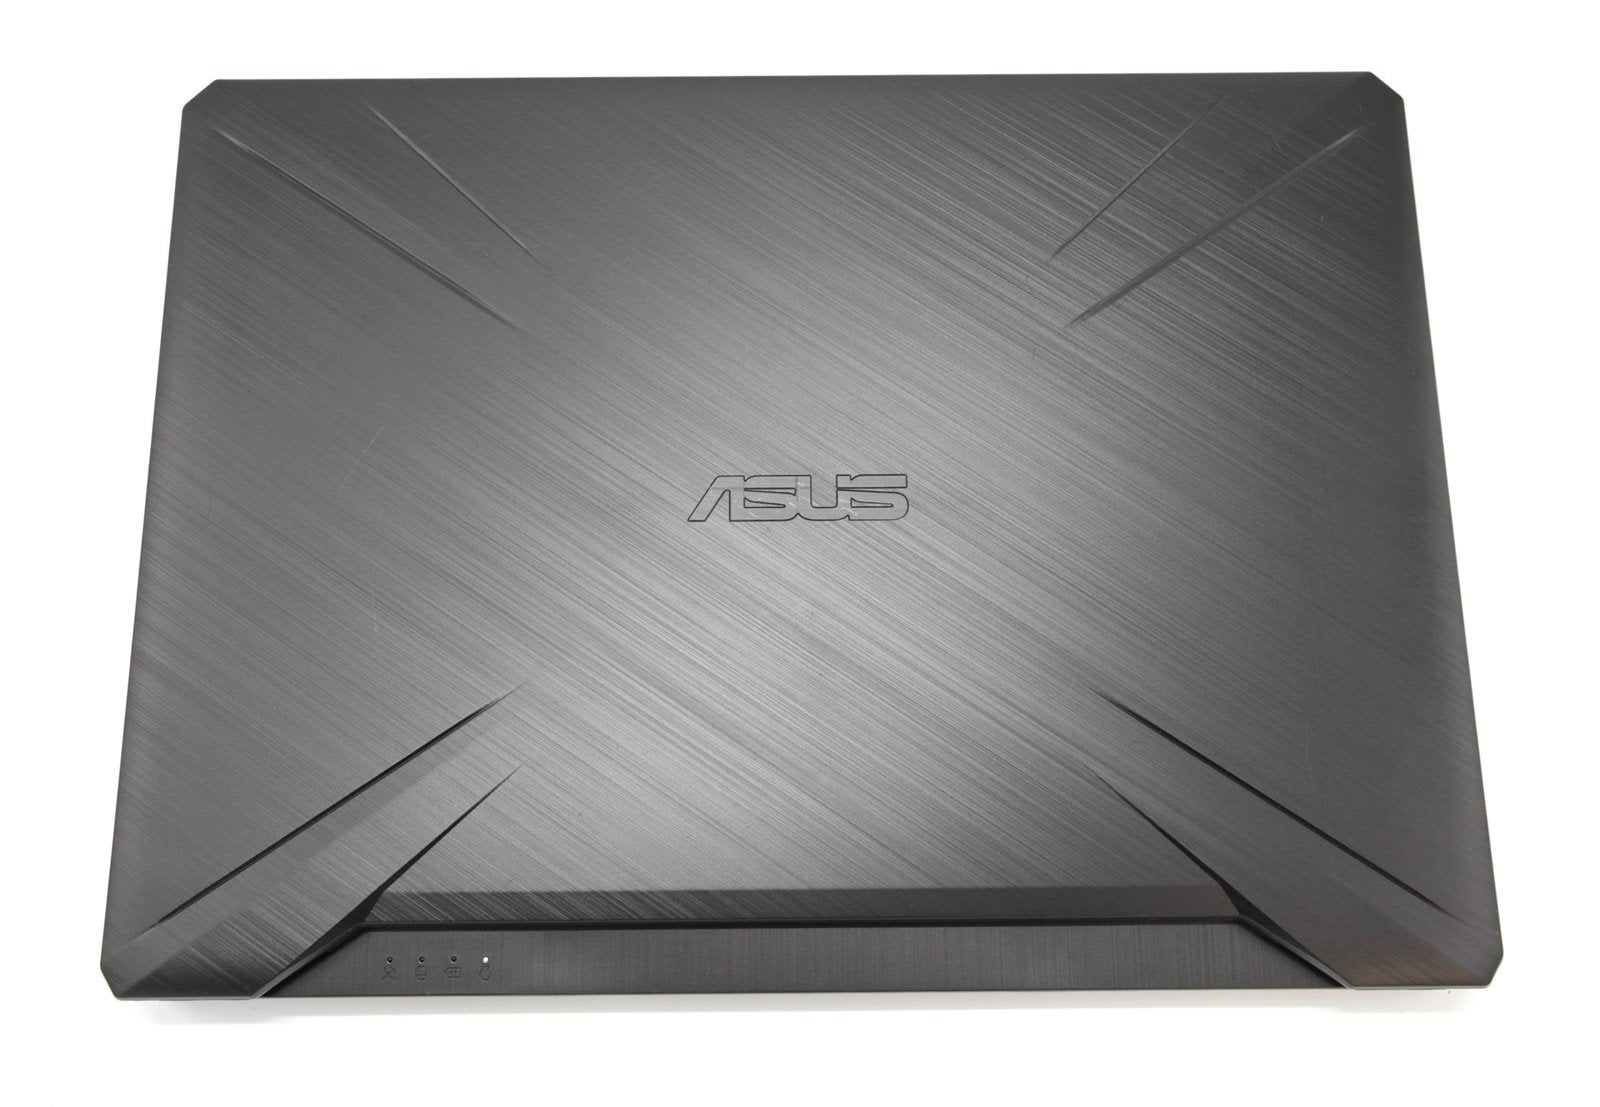 ASUS FX505DV 15.6" Gaming Laptop: RTX 2060, Ryzen 7 3750H, 16GB RAM, 512GB - CruiseTech